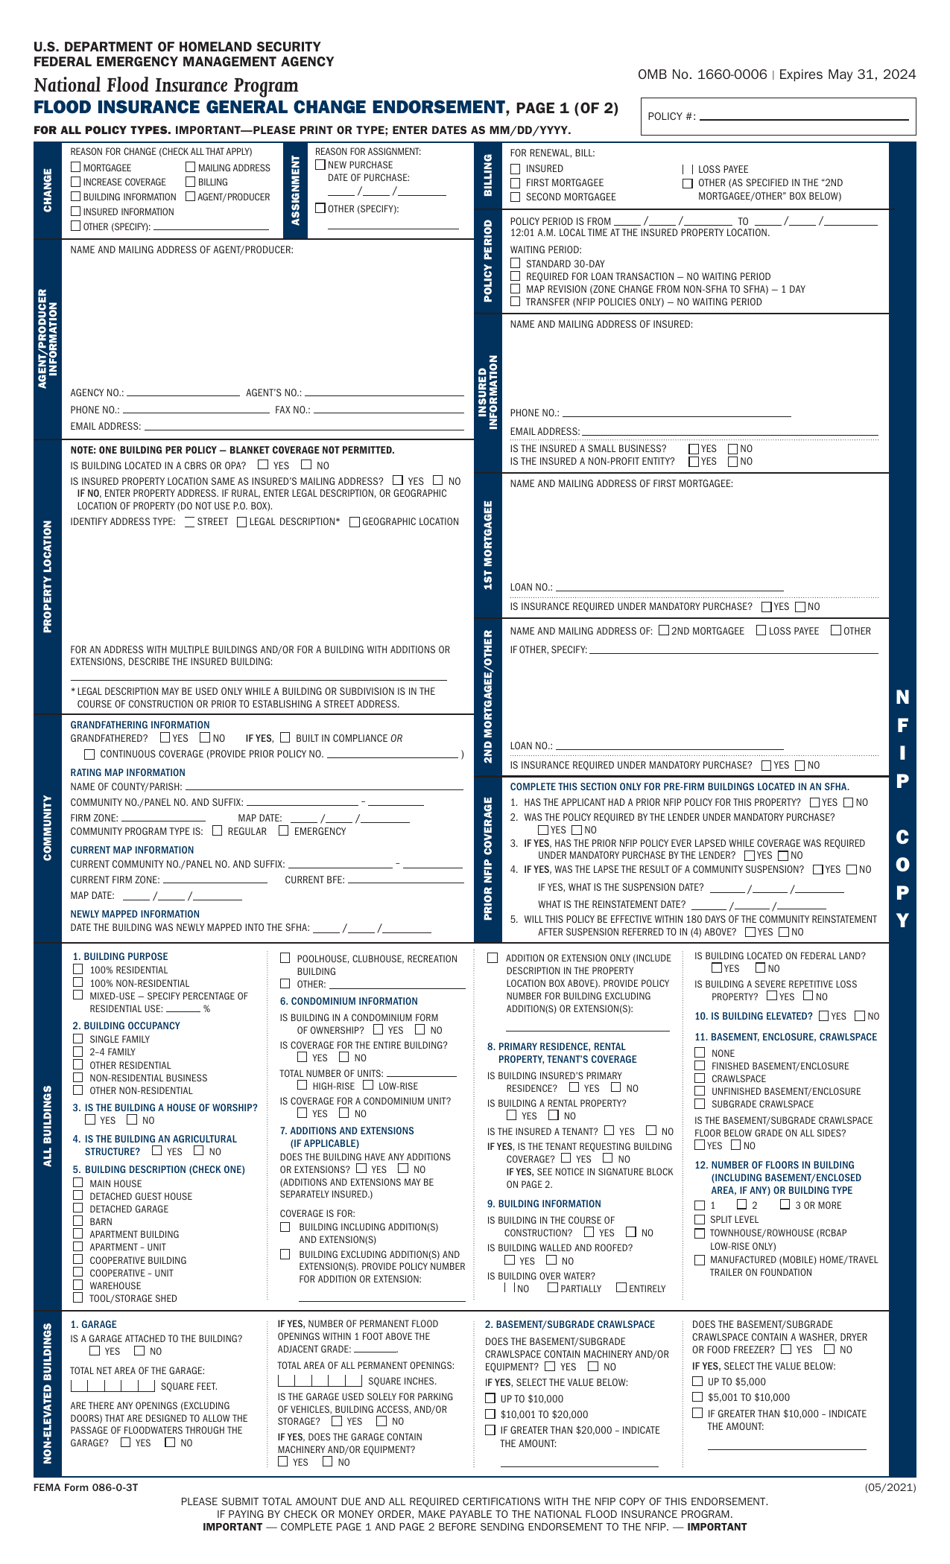 FEMA Form 086-0-3T Flood Insurance General Change Endorsement - Legacy Rating Plan, Page 1